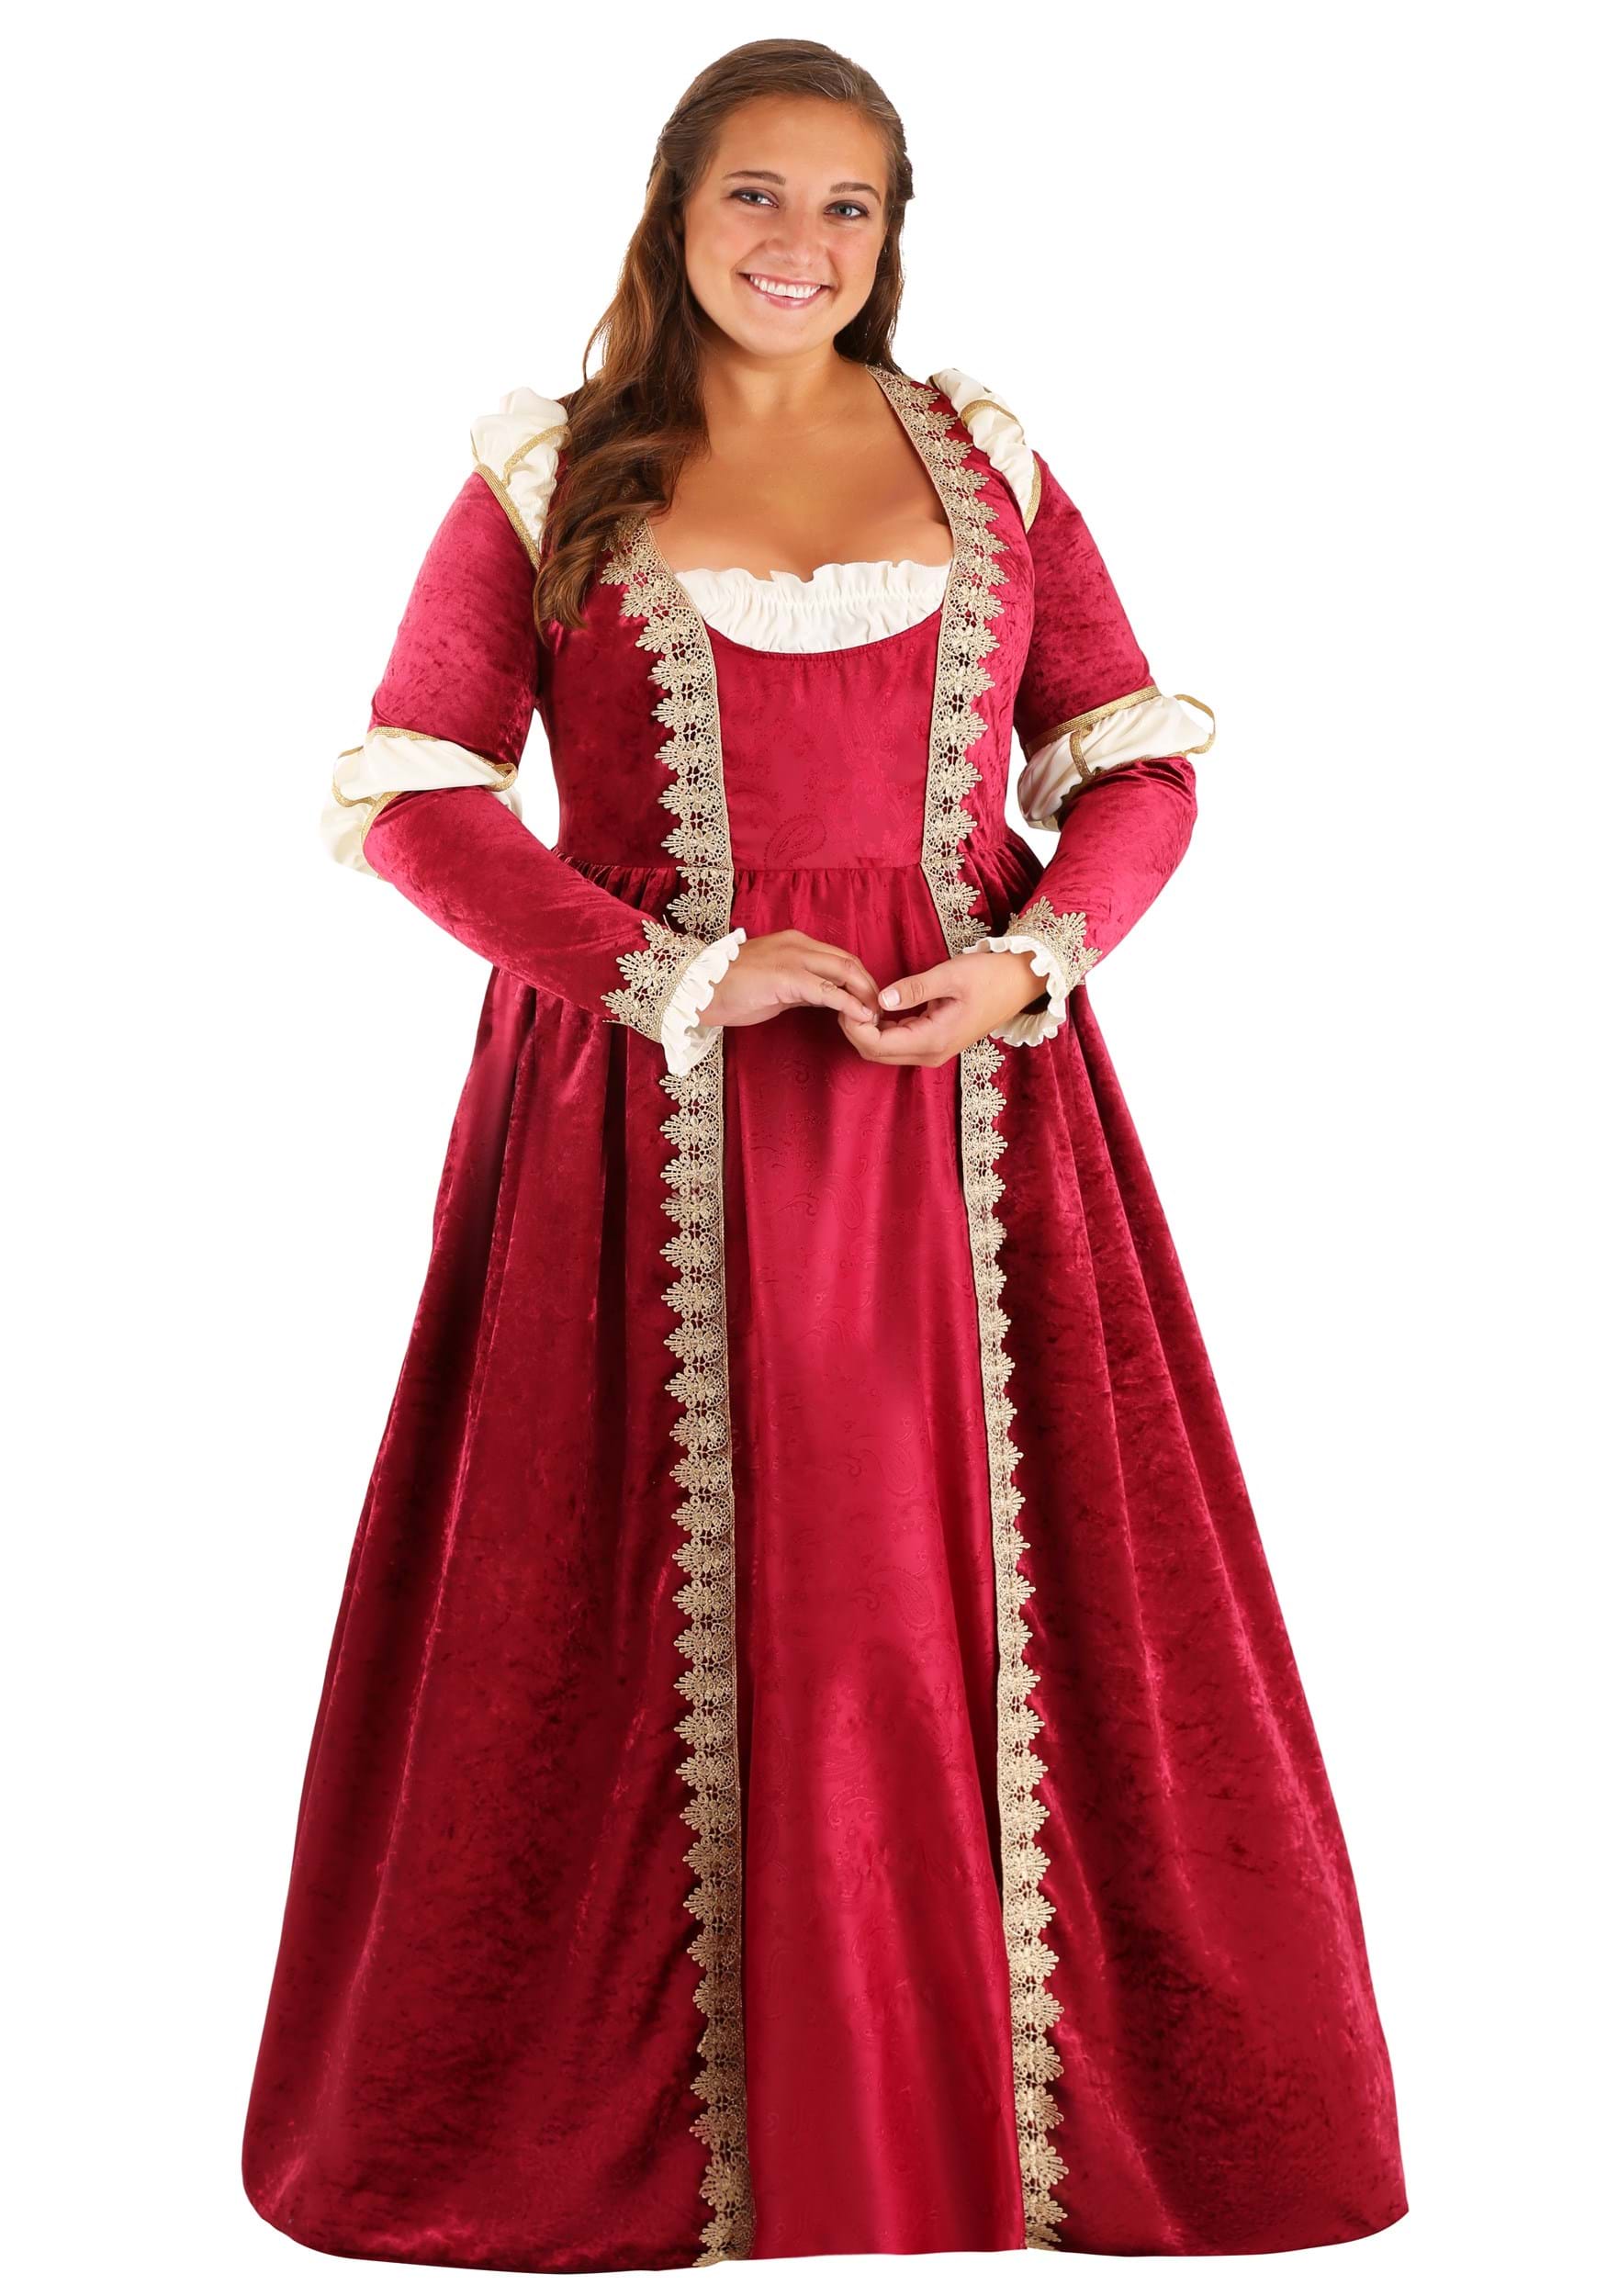 Plus Size Women’s Crimson Maiden Costume